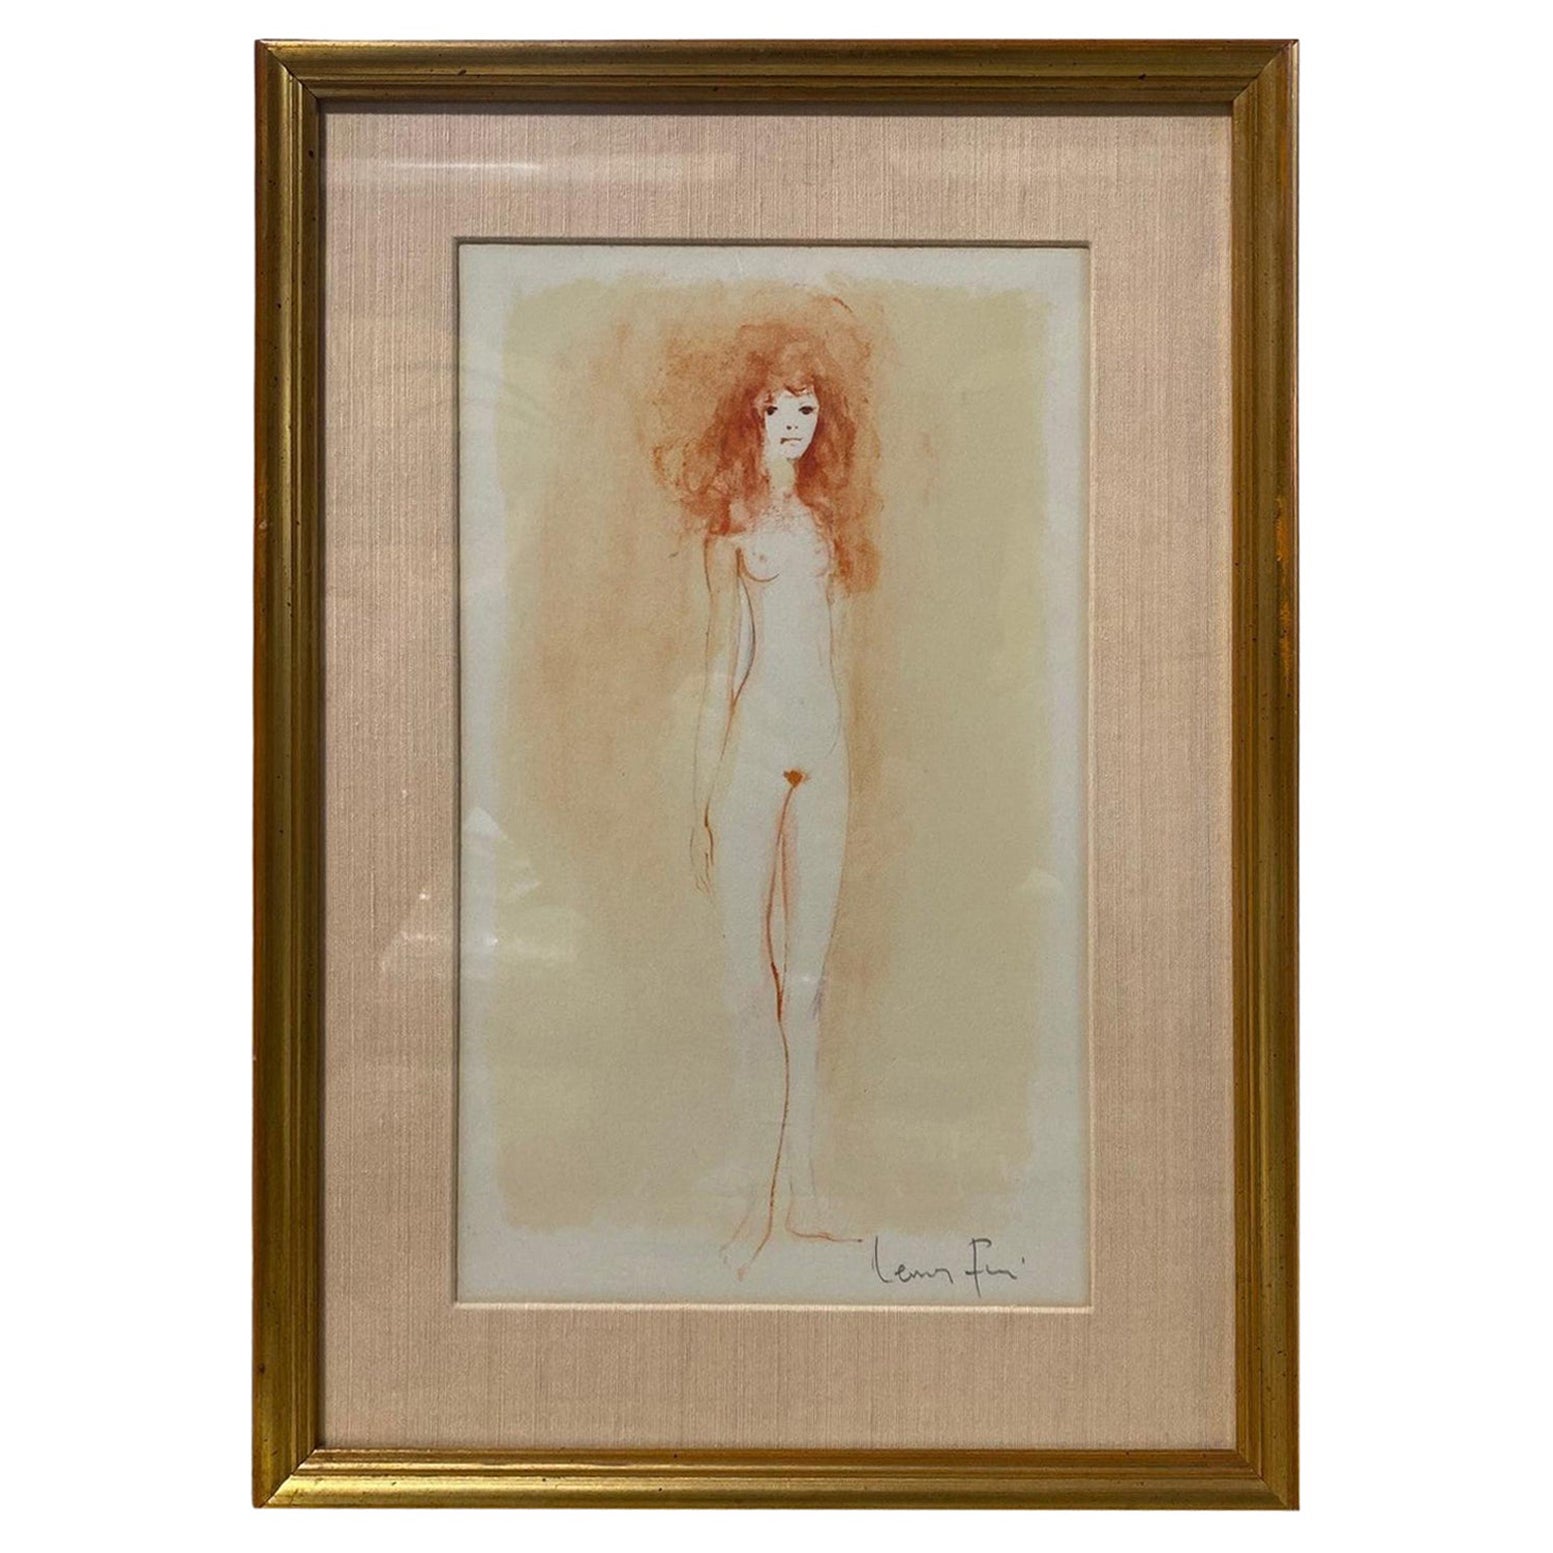 Leonor Fini Signed Framed Lithograh Print Femme Avec Cheveux Rouge, circa 1970s For Sale